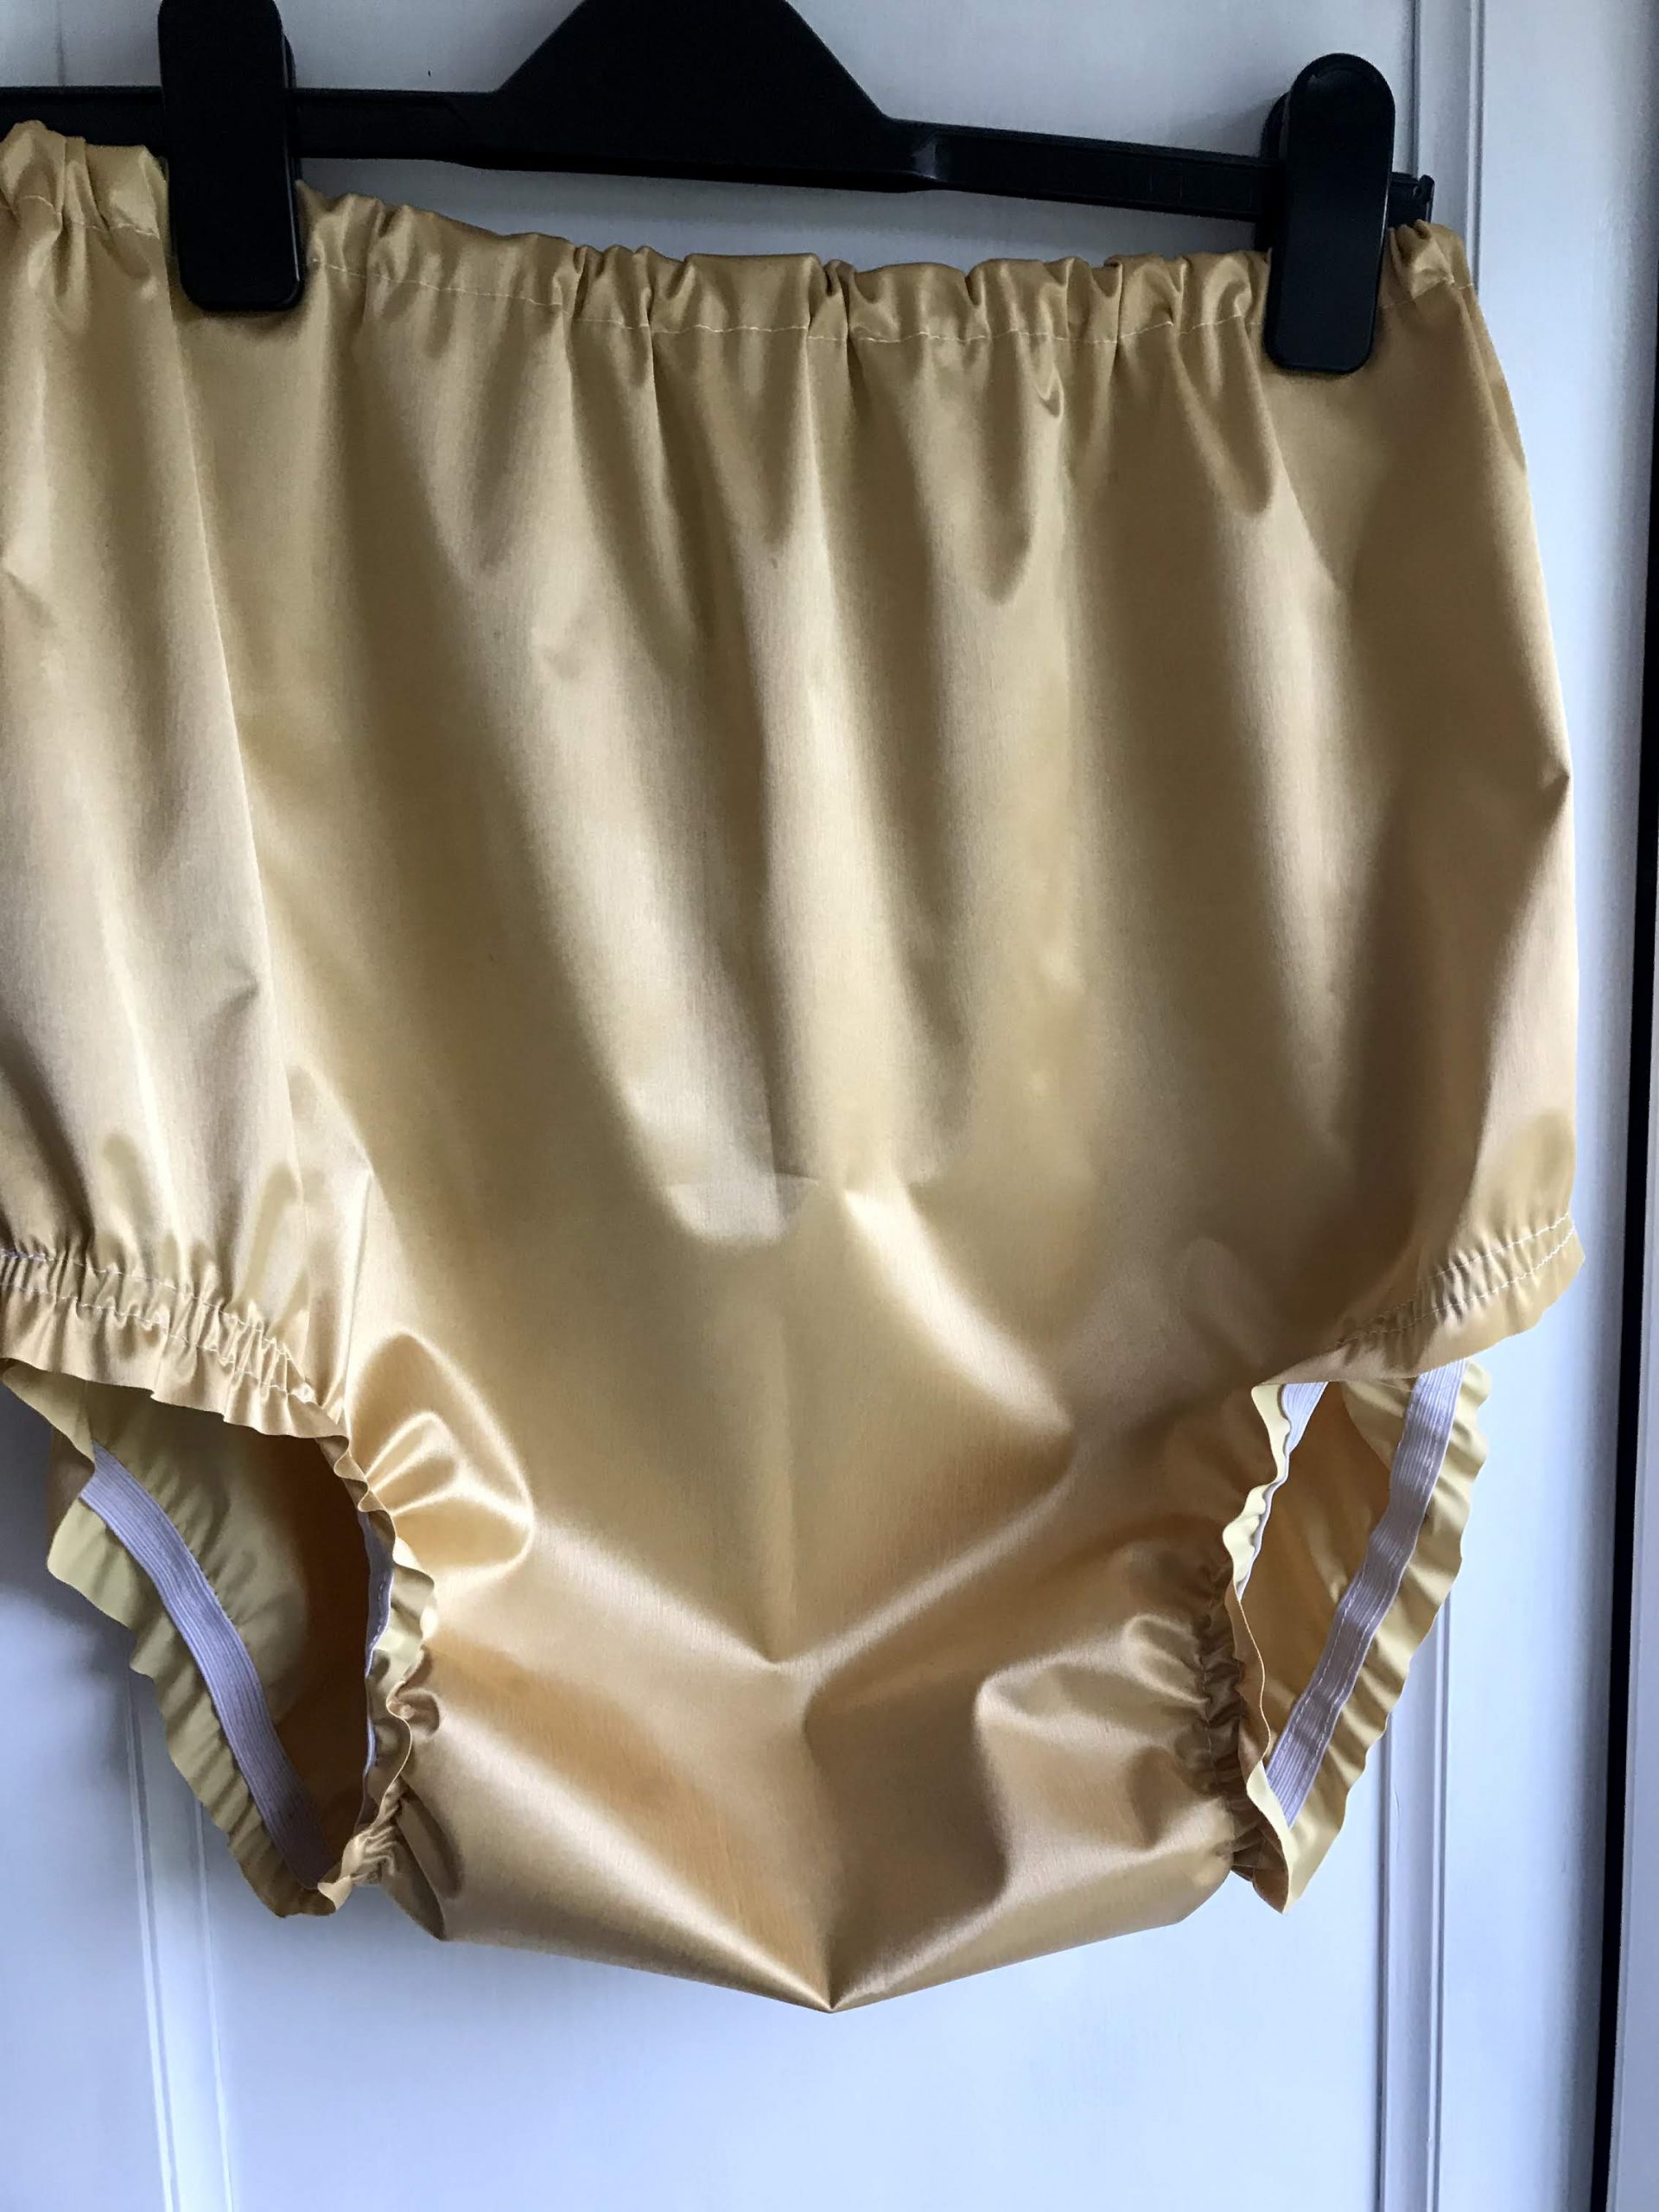 Gold satin rubber lined Incontinence pants - Hamilton Classics Rainwear